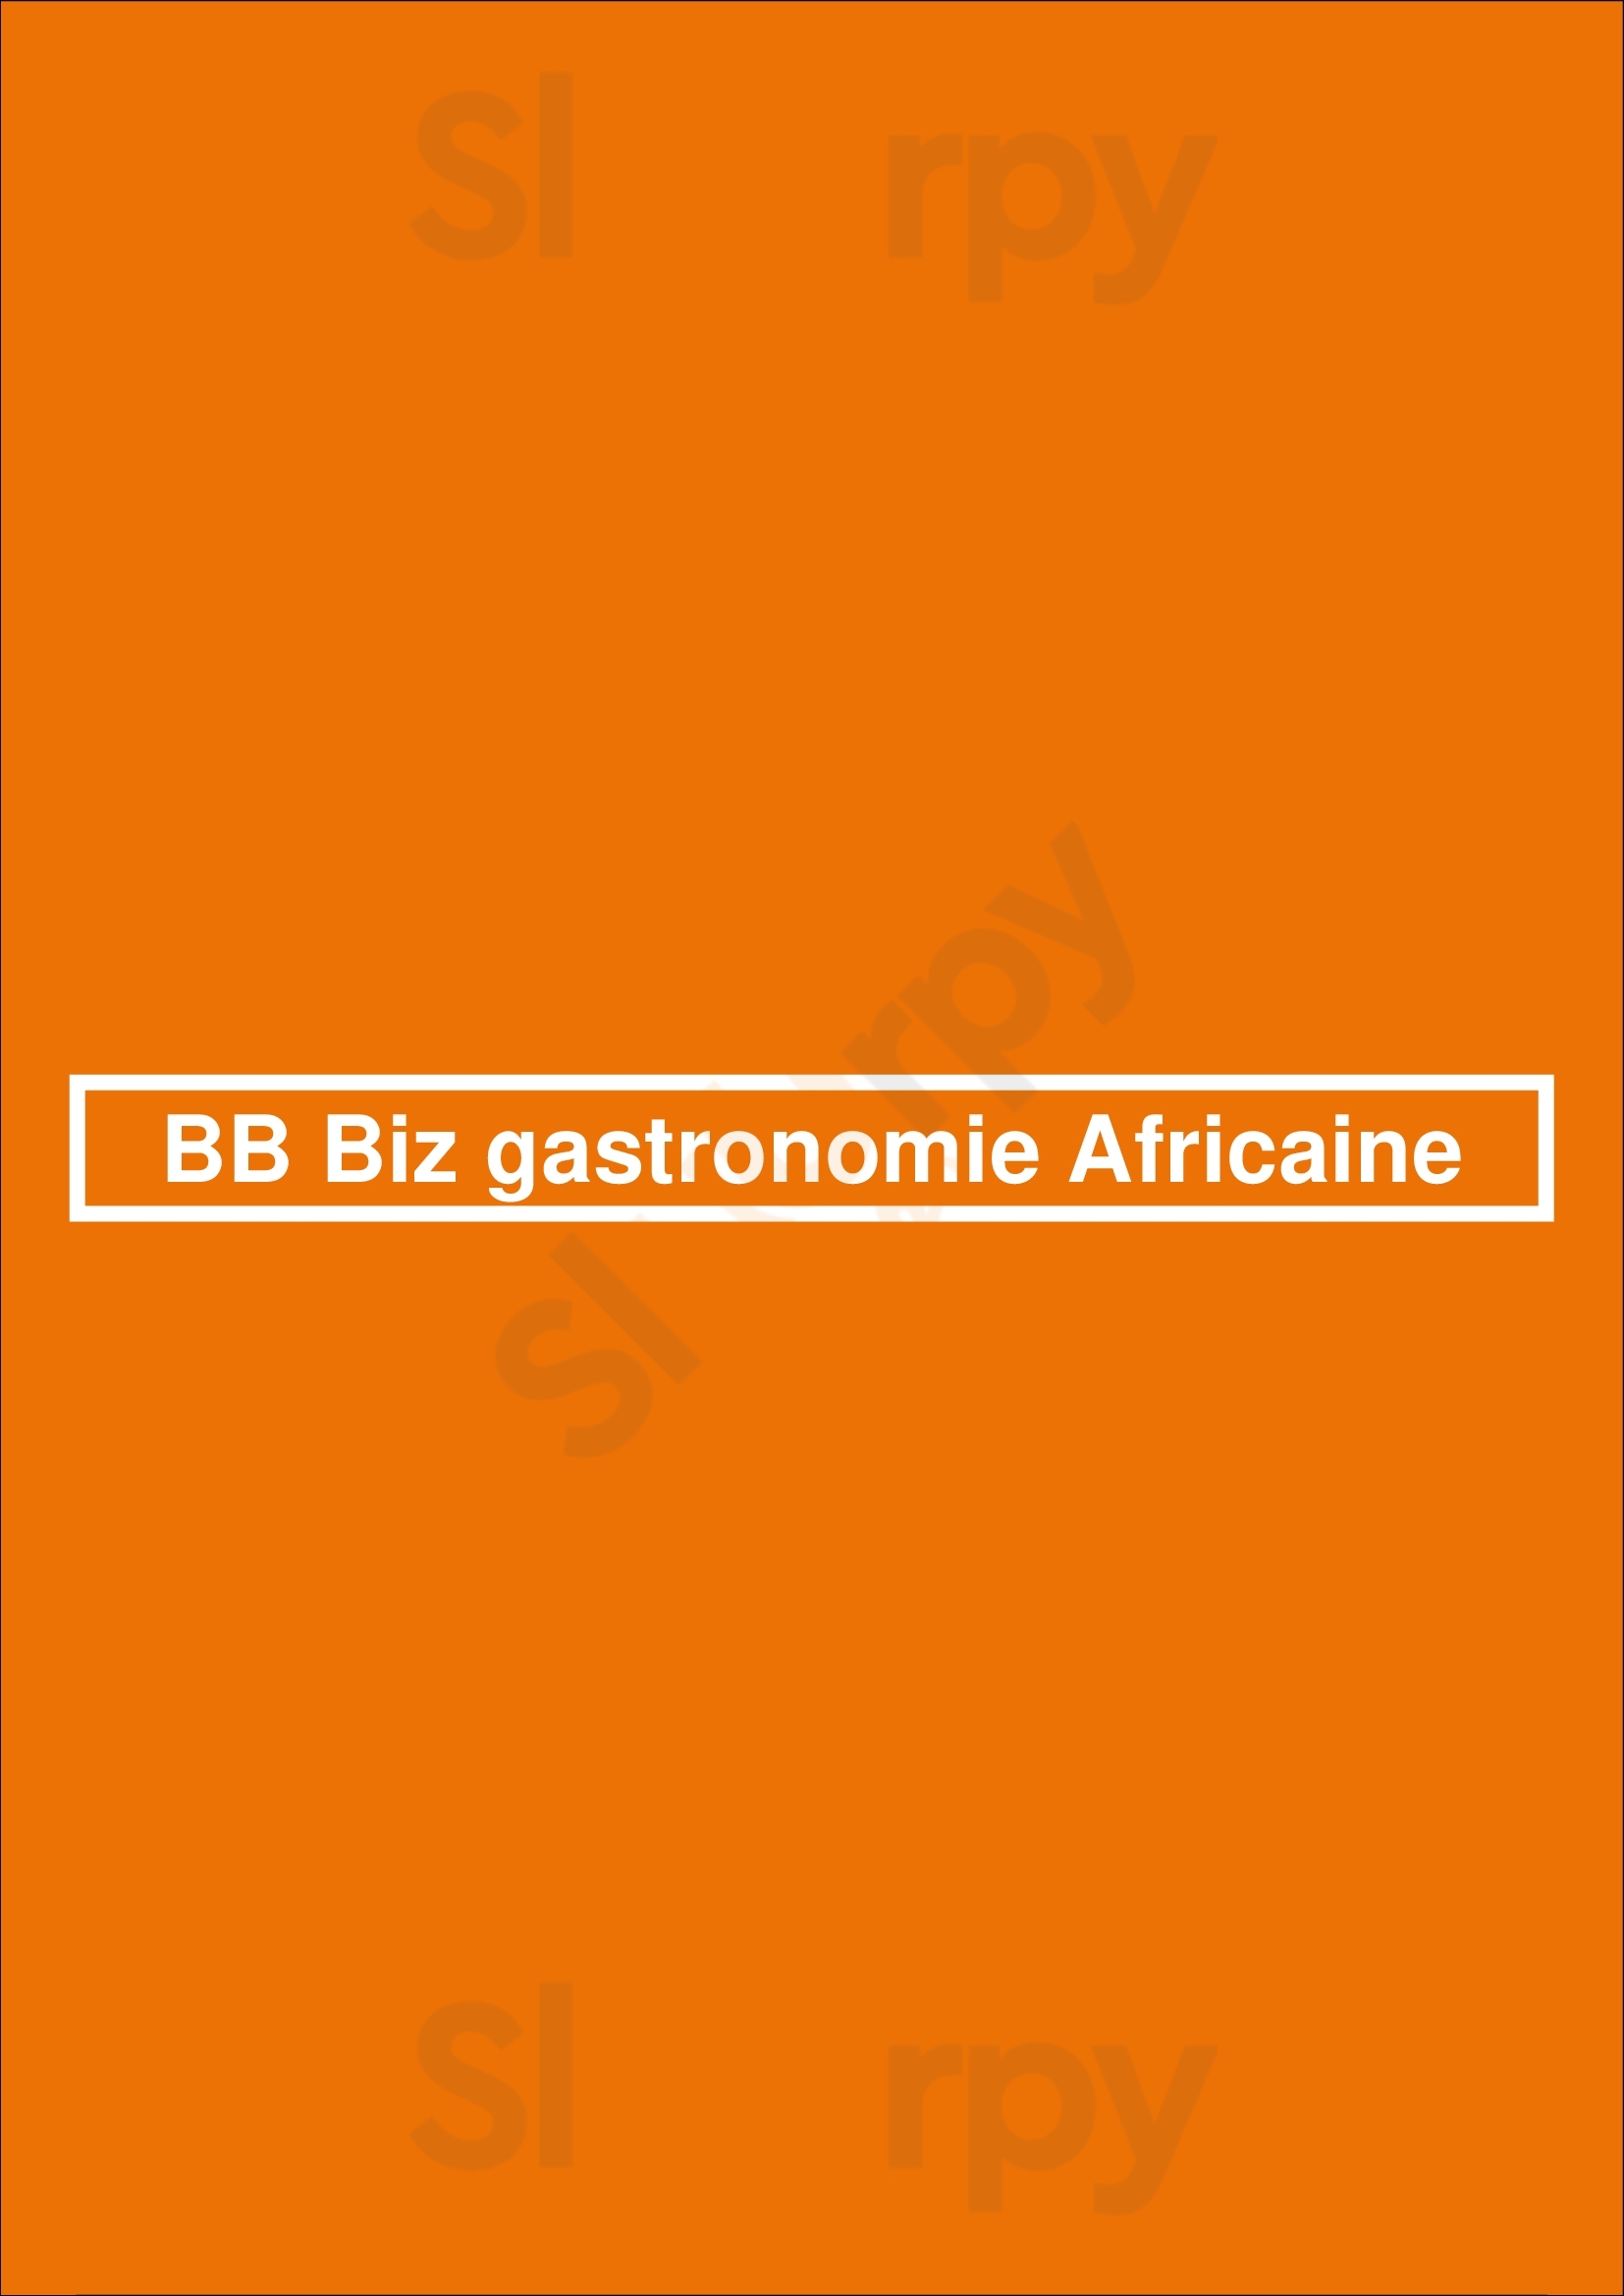 Bb Biz Gastronomie Africaine Lyon Menu - 1